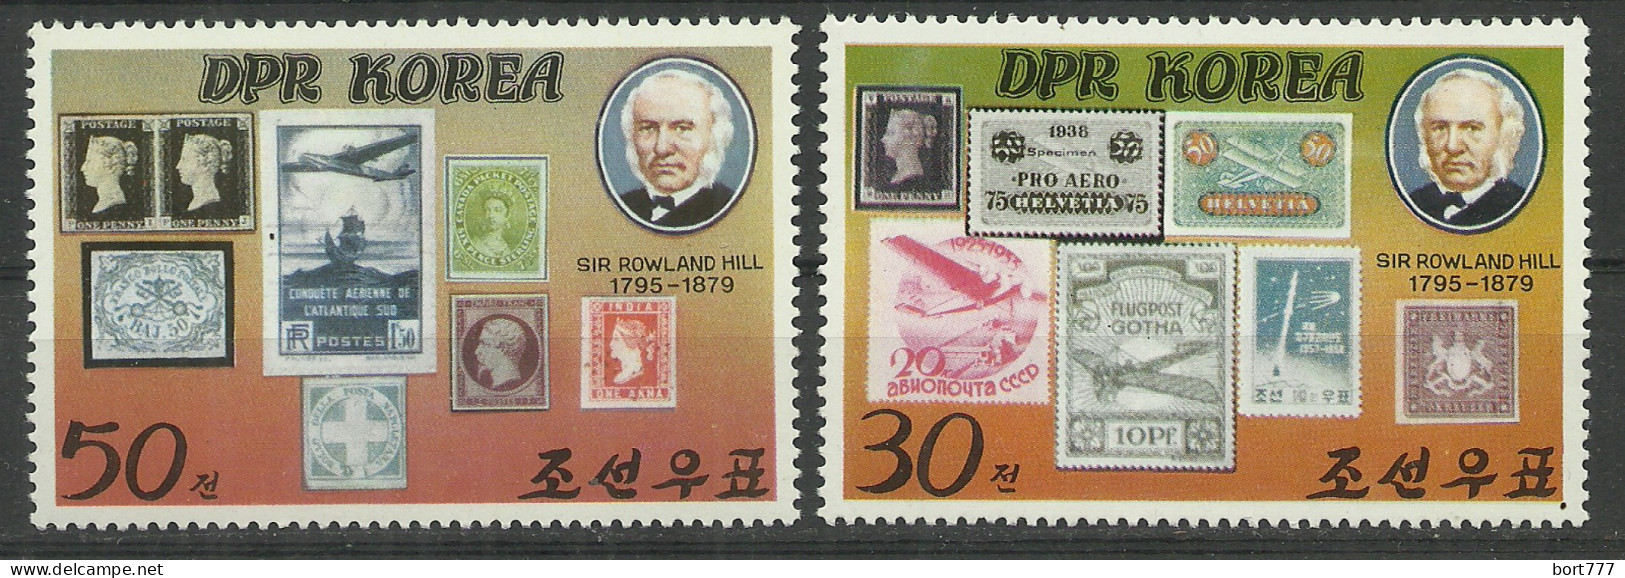 KOREA 1980 Year, Mint Stamps MNH (**) - Korea, North